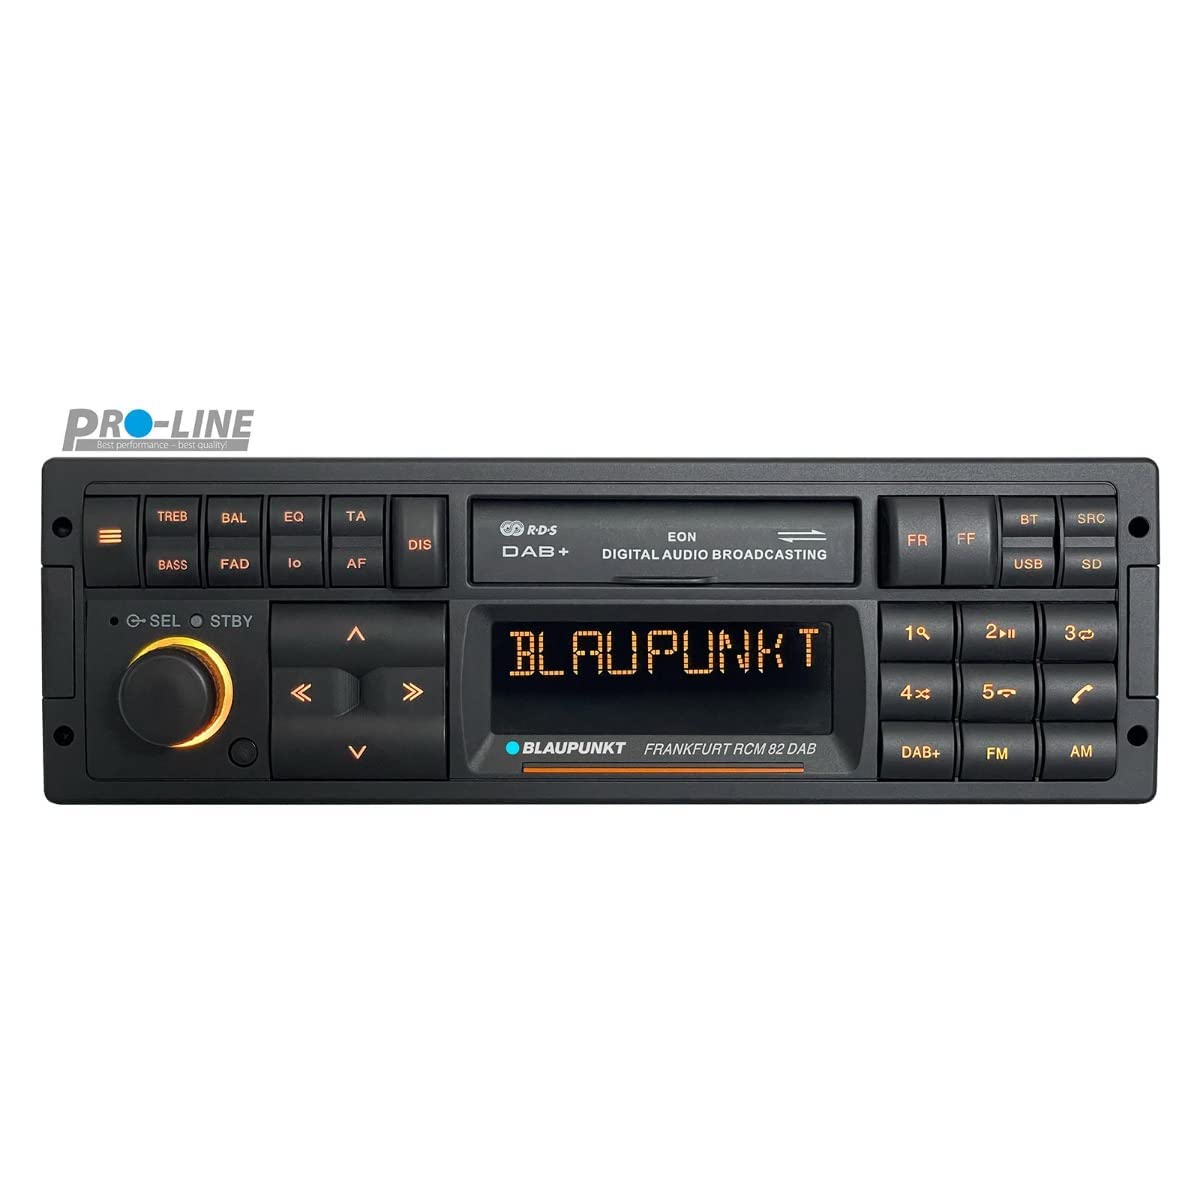 Blaupunkt Frankfurt RCM 82 DAB,1-DIN Autoradio, DAB+, Bluetooth, AUX; USB, SD-Karteneingang, Lenkradfernbedienung, Freisprecheinrichtung, Equalizer, 200 Watt